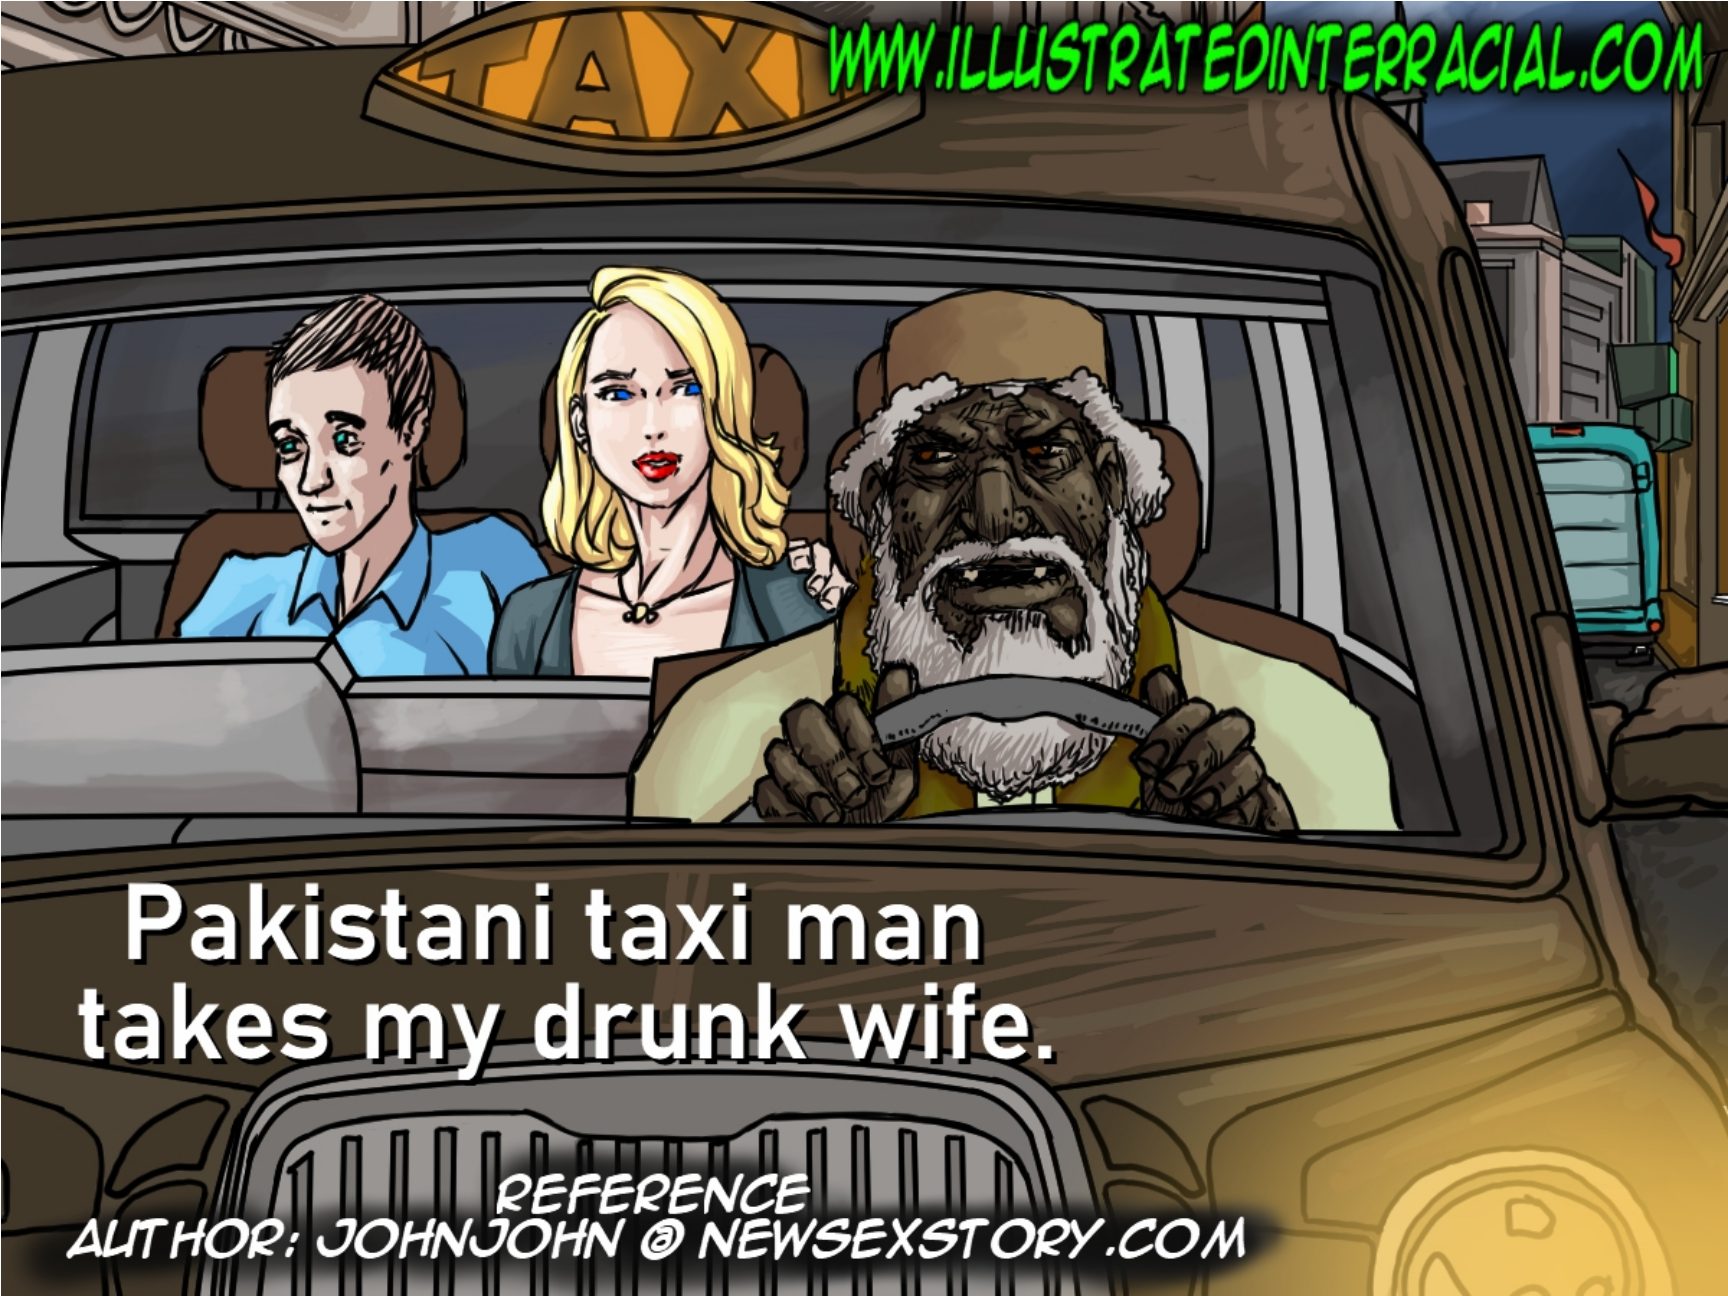 Pakastani Taxi Man - illustratedinterracial pic